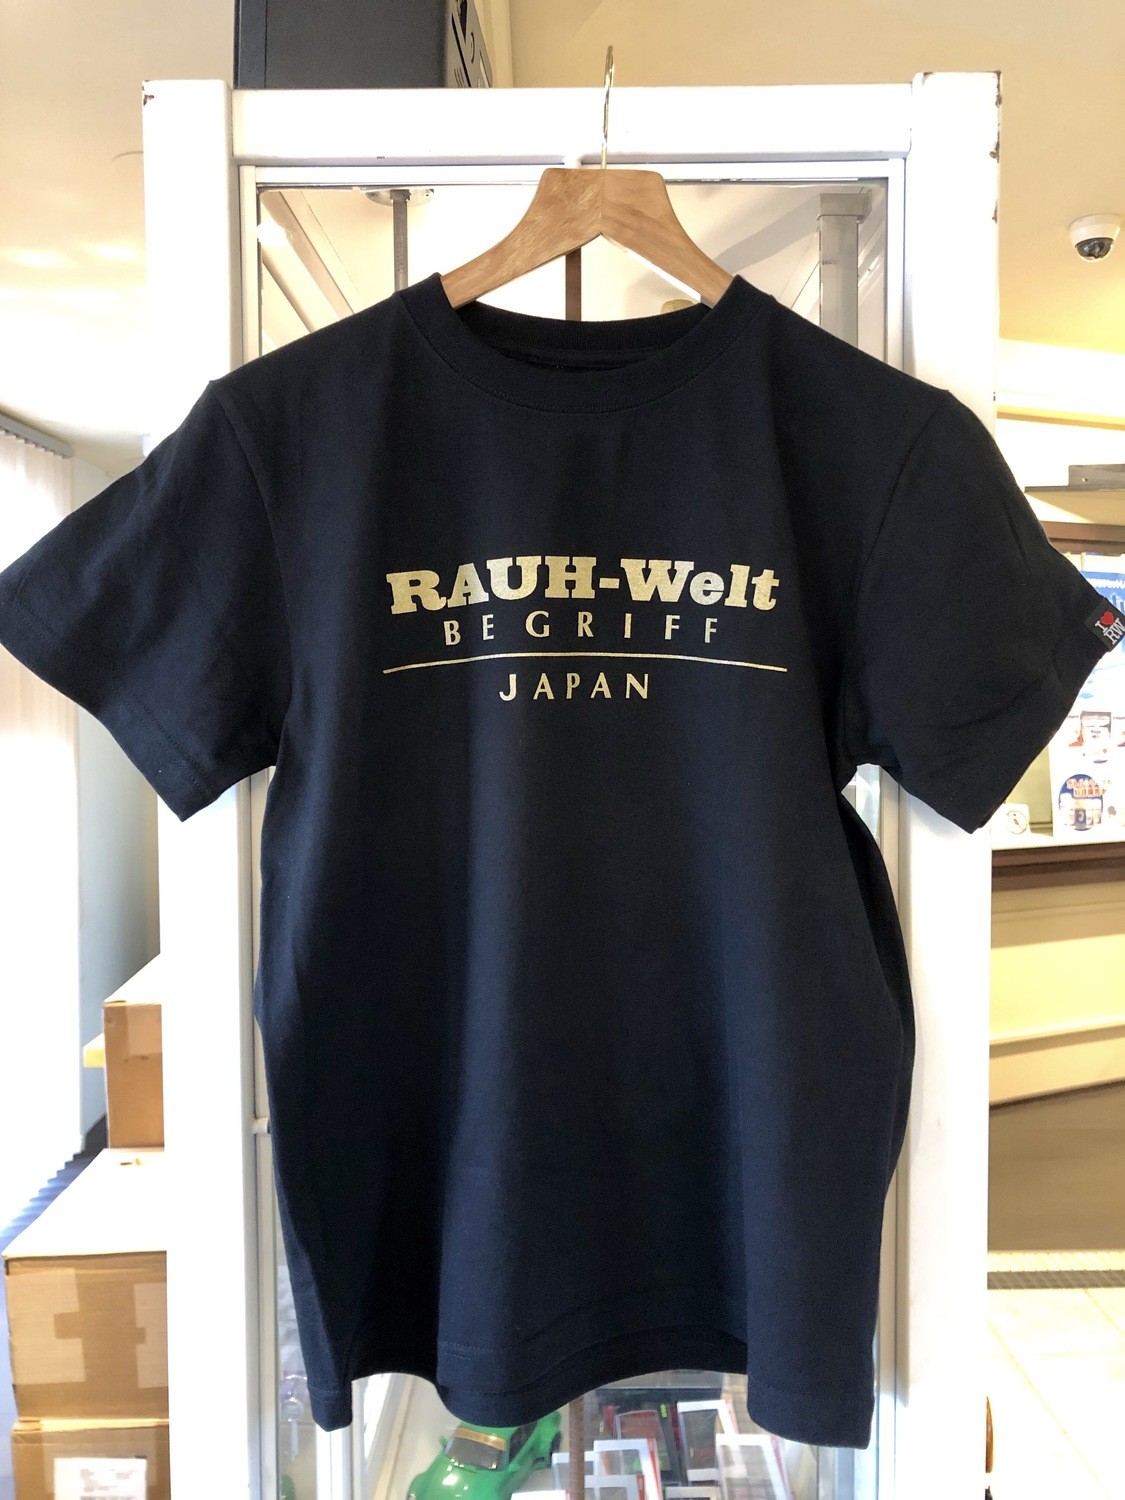 RAUH-Welt Begriff Japan Tee